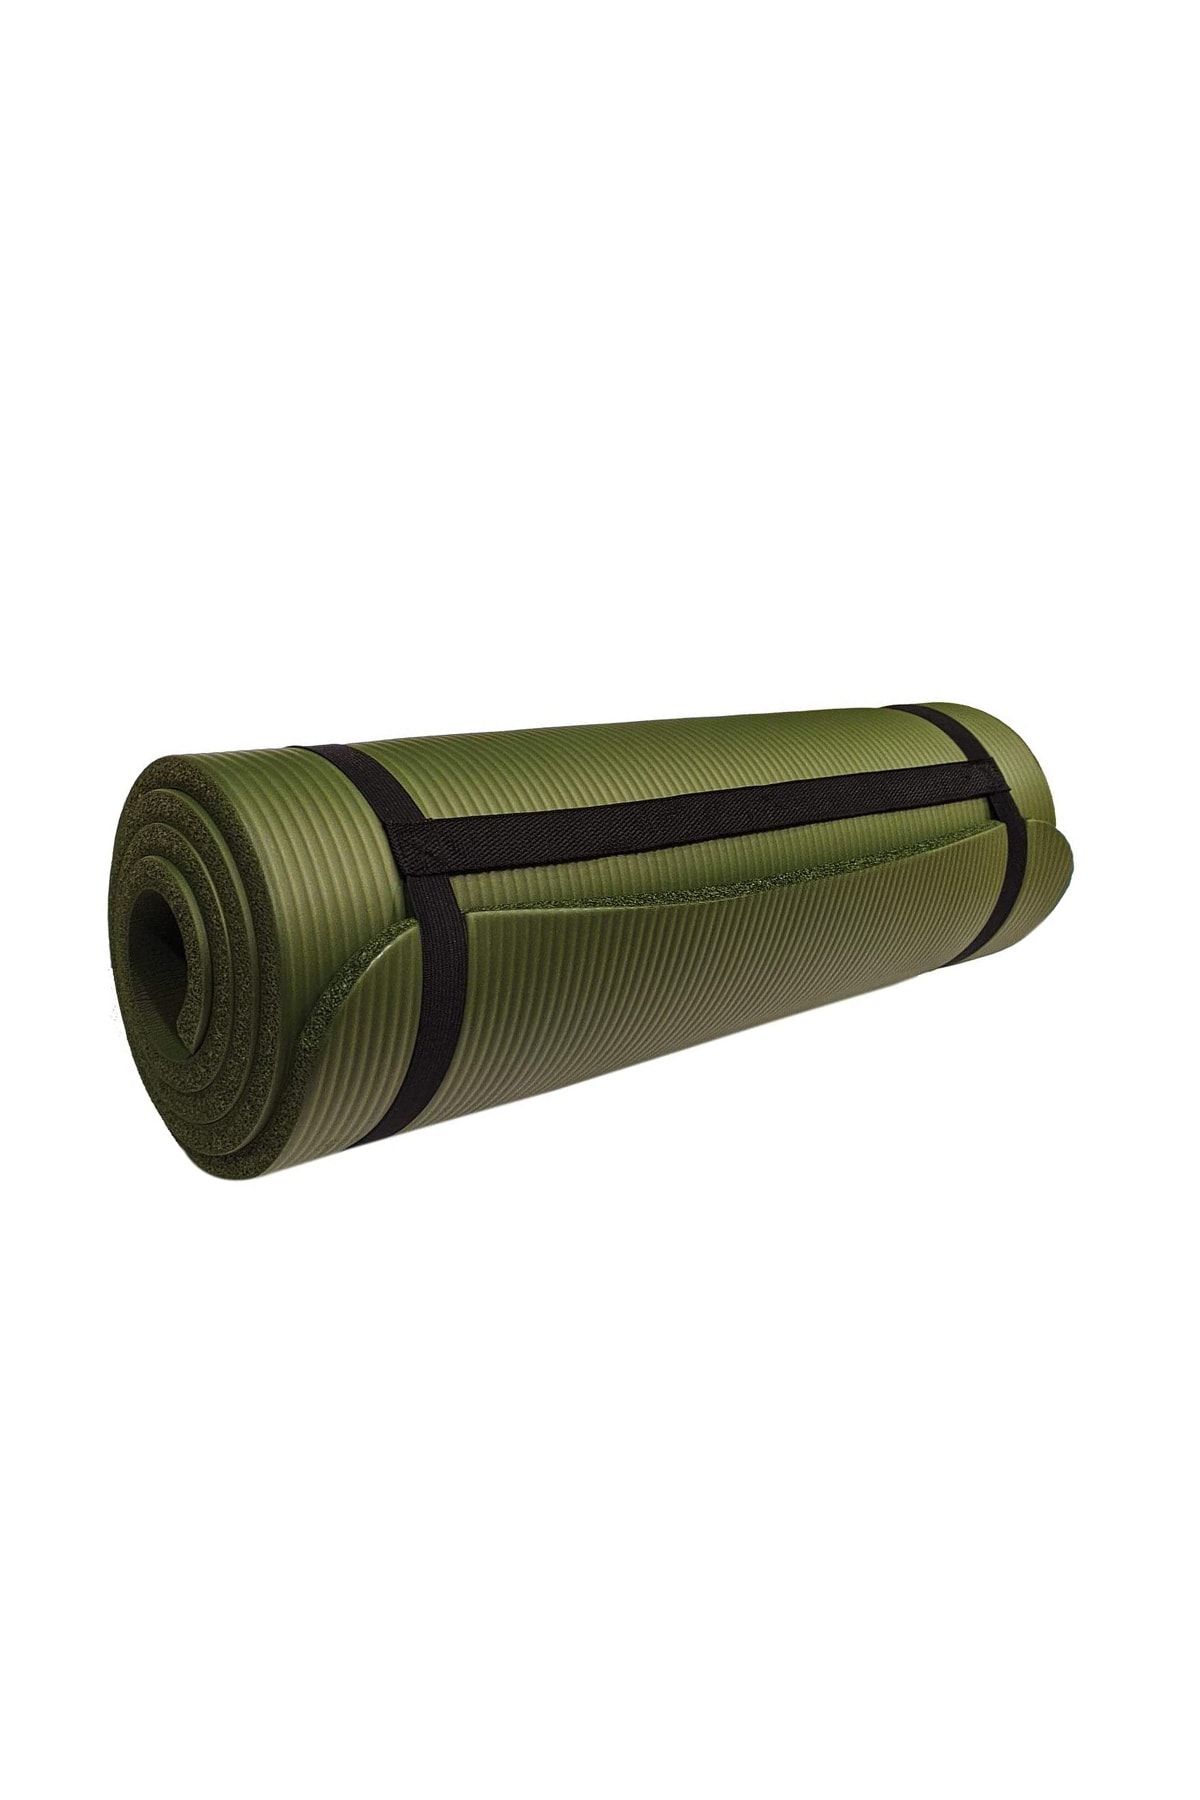 Avessa Yeşil Pilates Minderi Yoga Mat 15mm